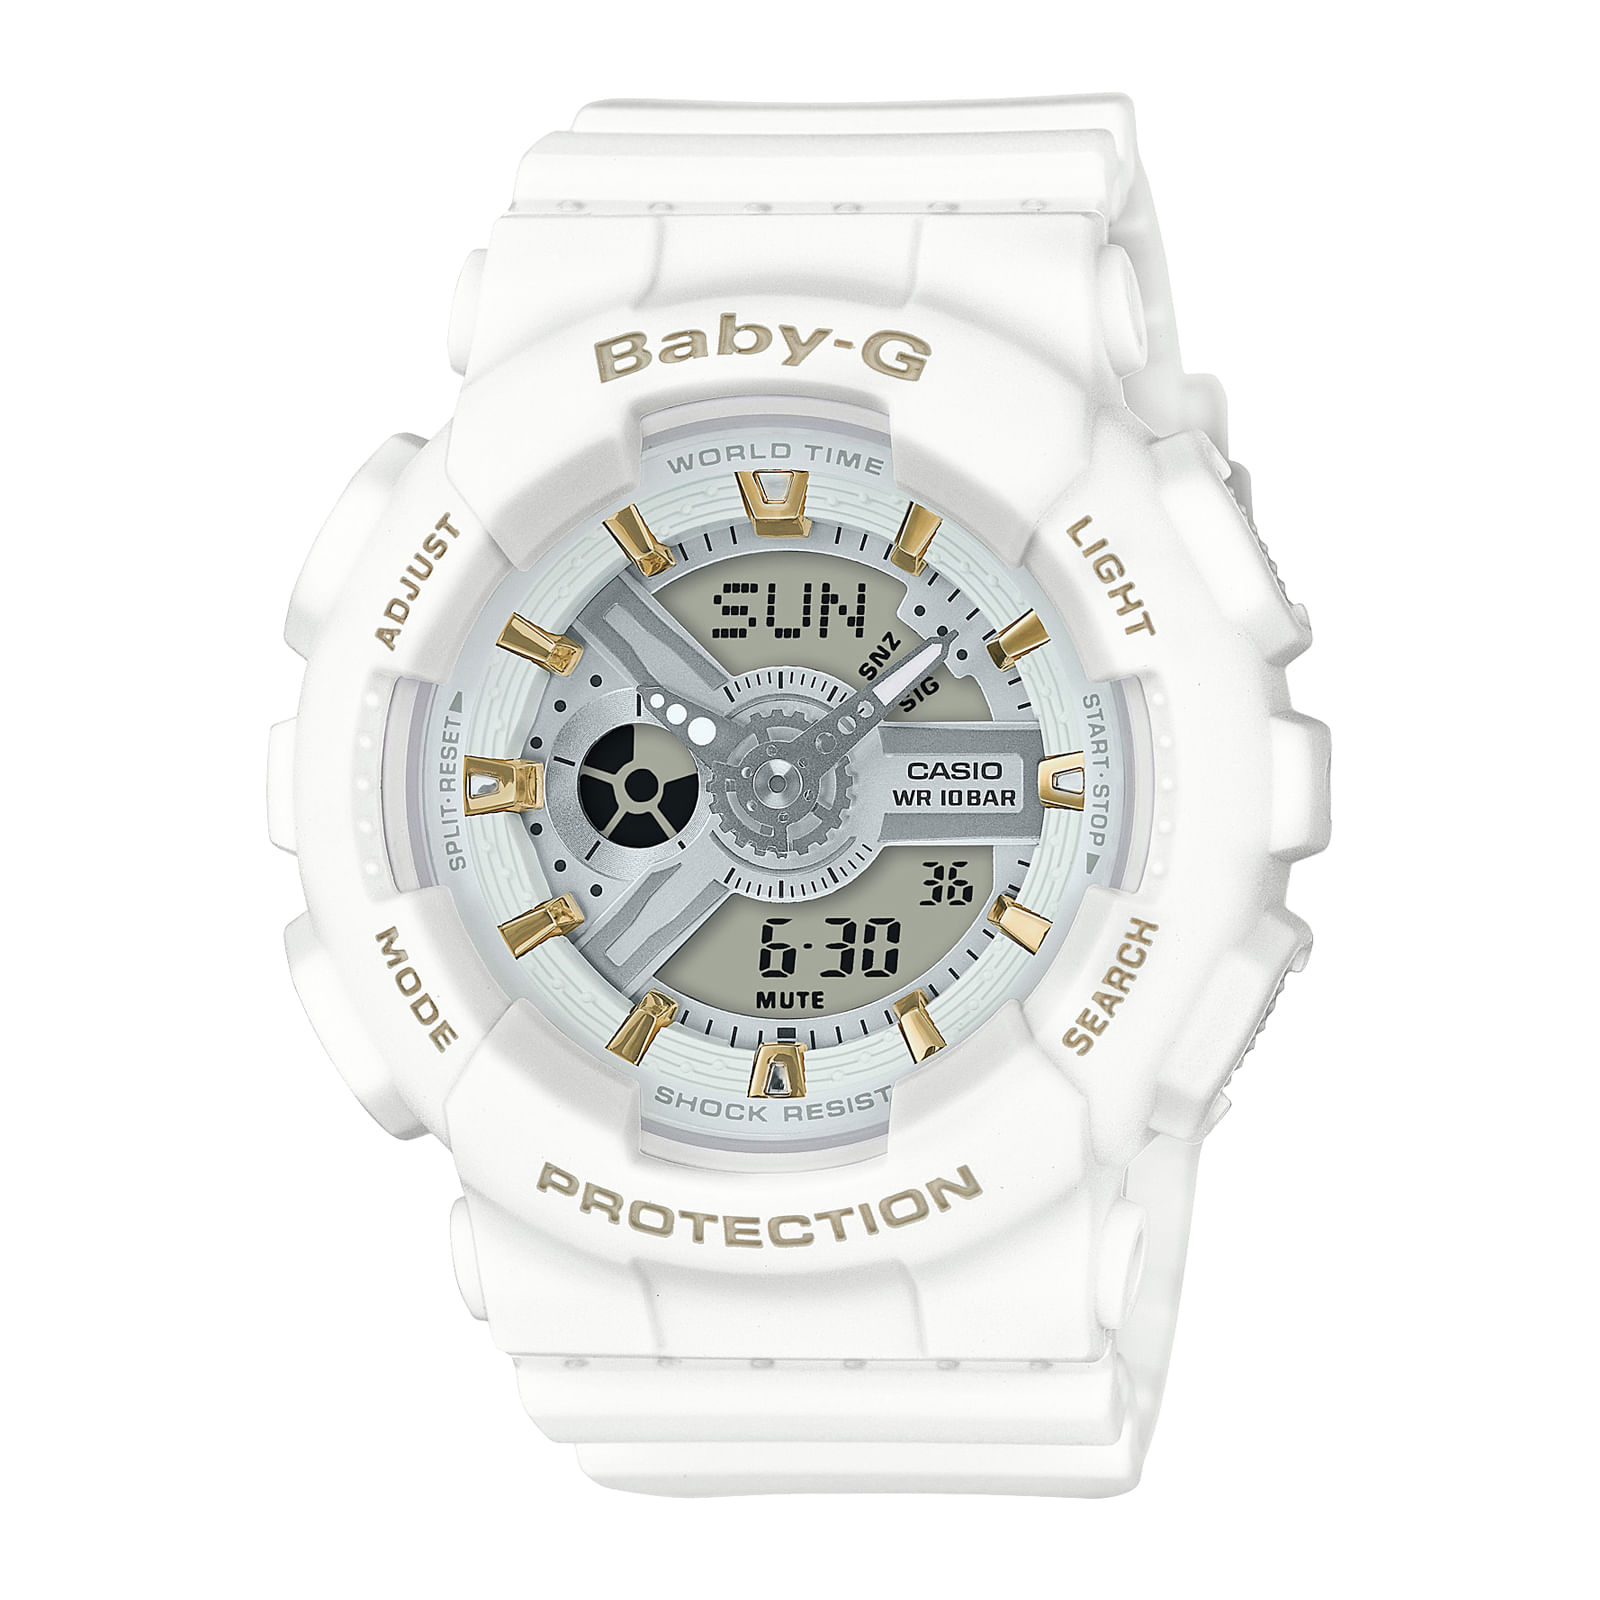 Reloj BABY-G BA-110GA-7A1 Resina Mujer Blanco